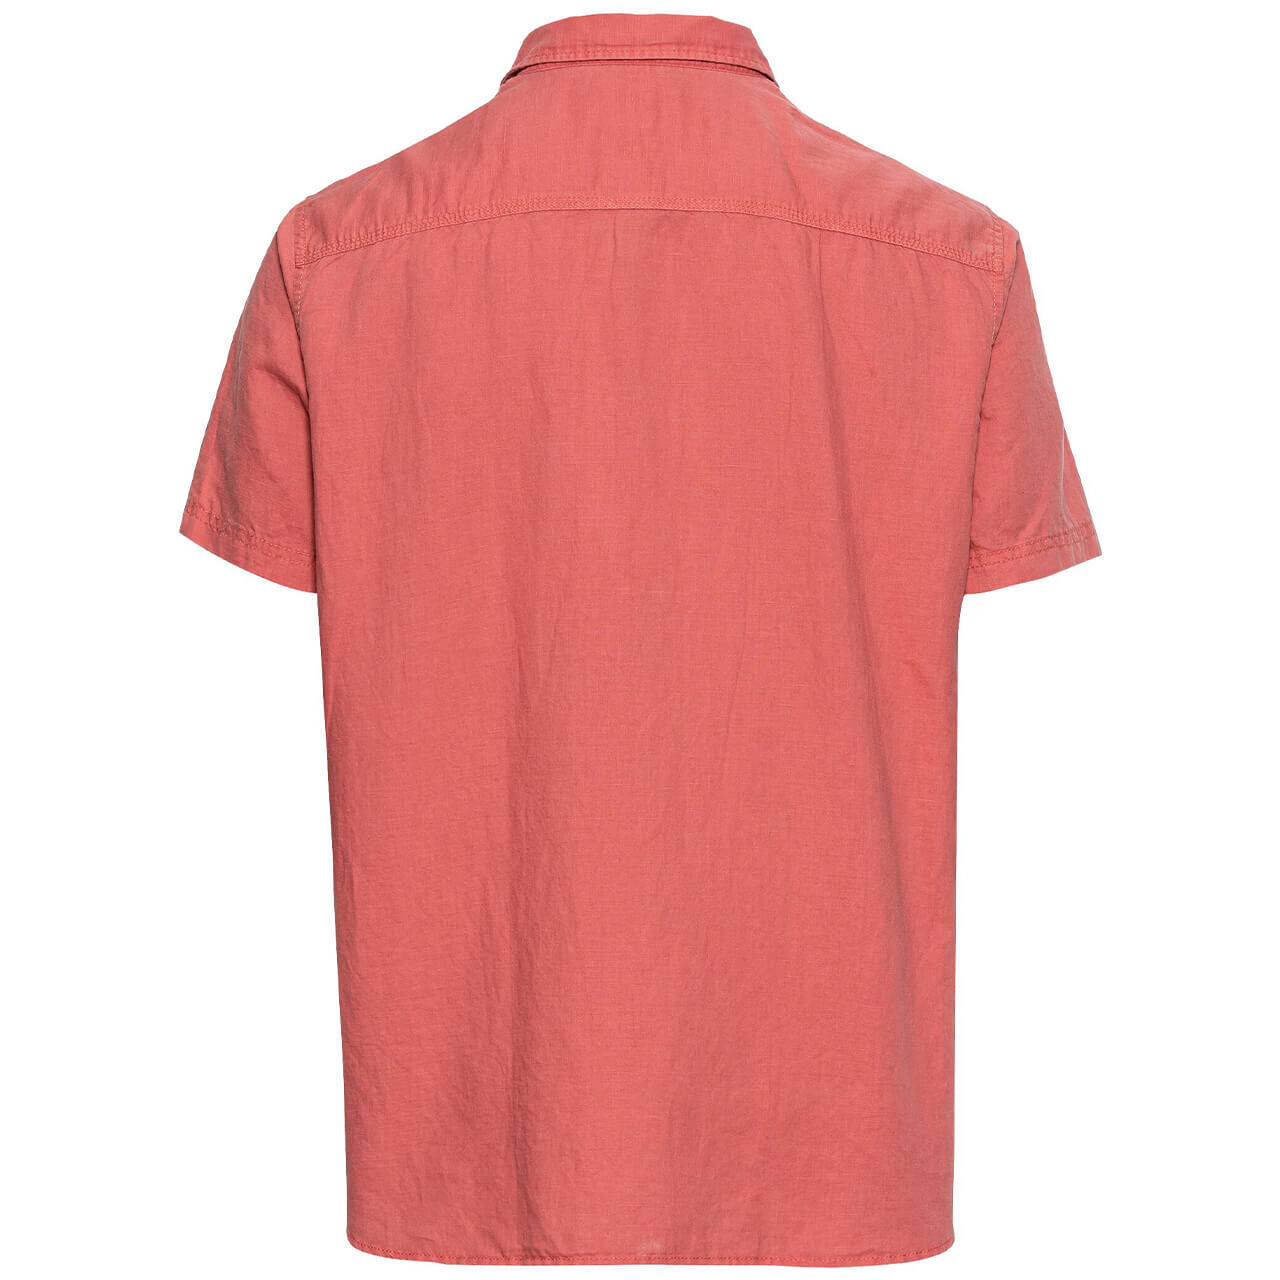 Camel active Herren 1/2 Arm Hemd faded red linen blend